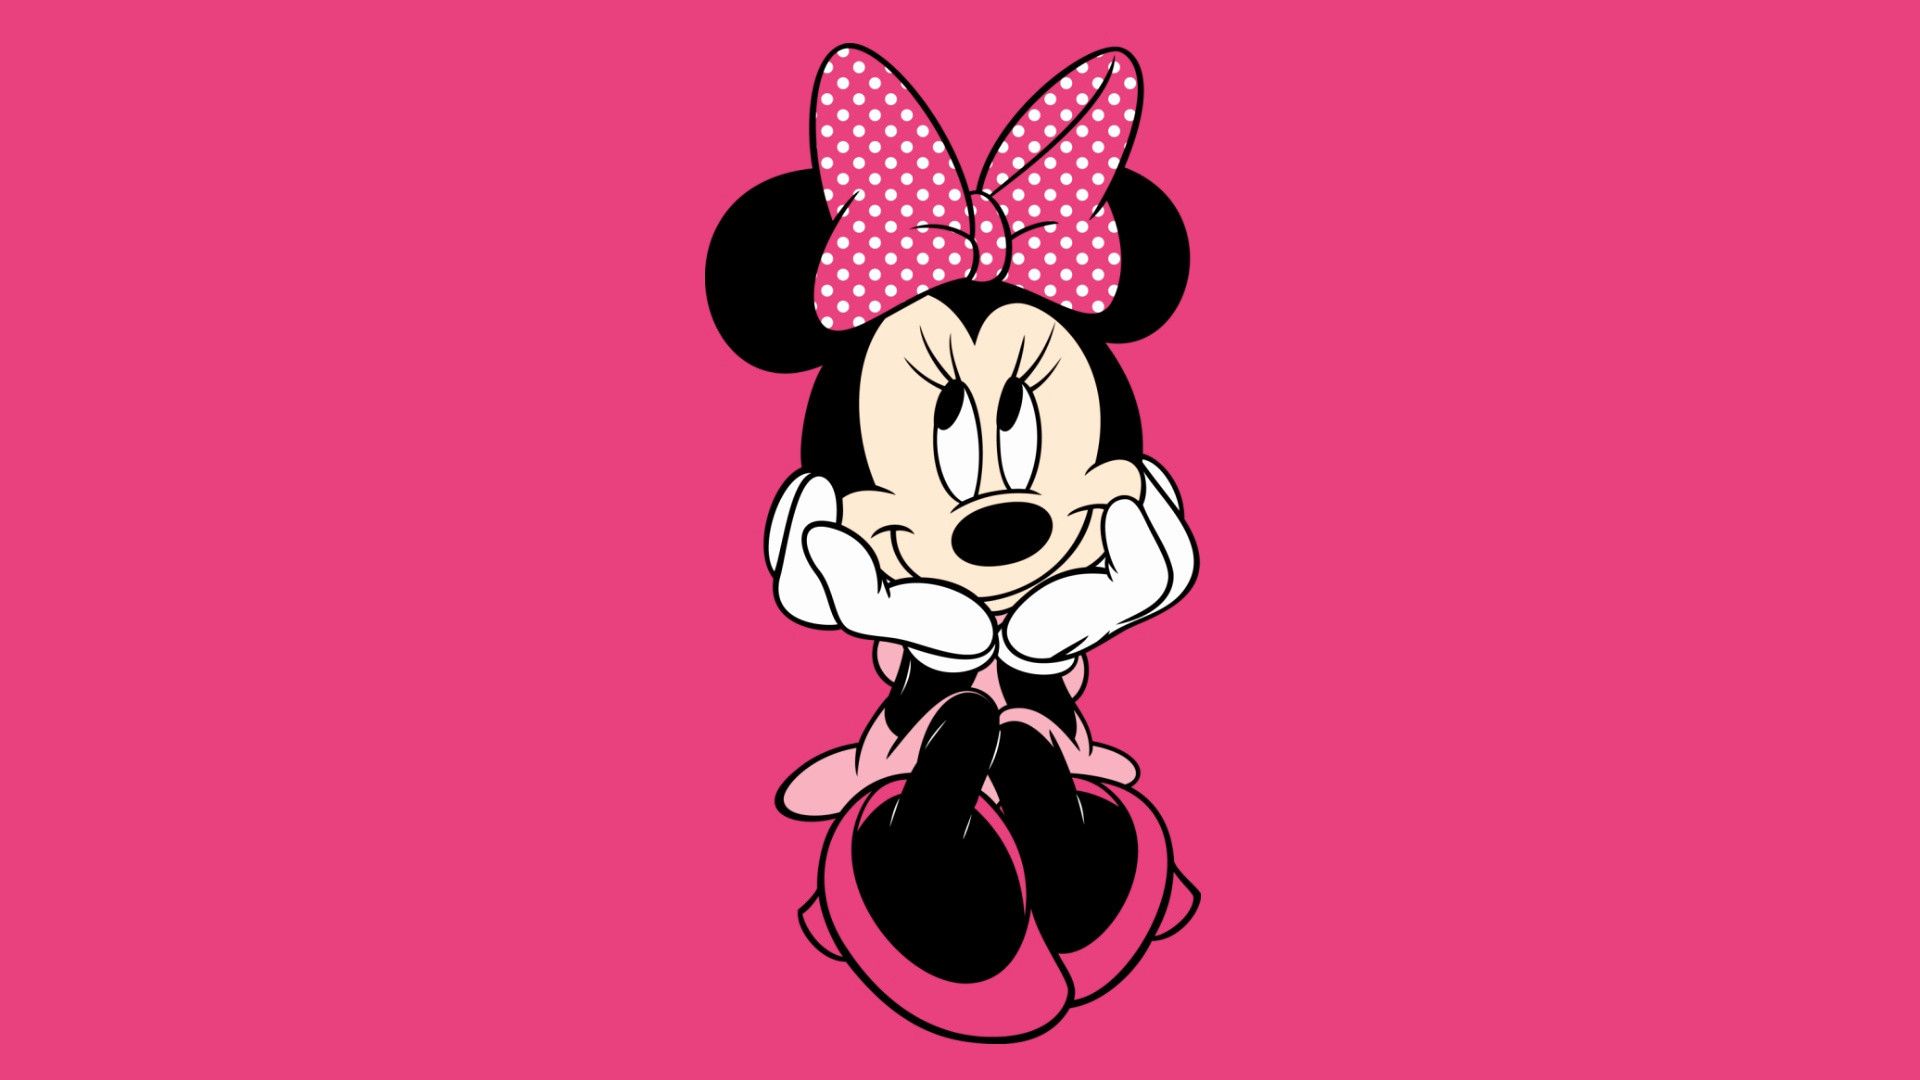 Fondos de Mickey Mouse gratis - Fondo de pantalla de Minnie Mouse para  computadora portátil, Hd. Fondo para computadora HD 1080p de Minnie Mouse.  de Minnie Mouse, Personajes - Todo fondos